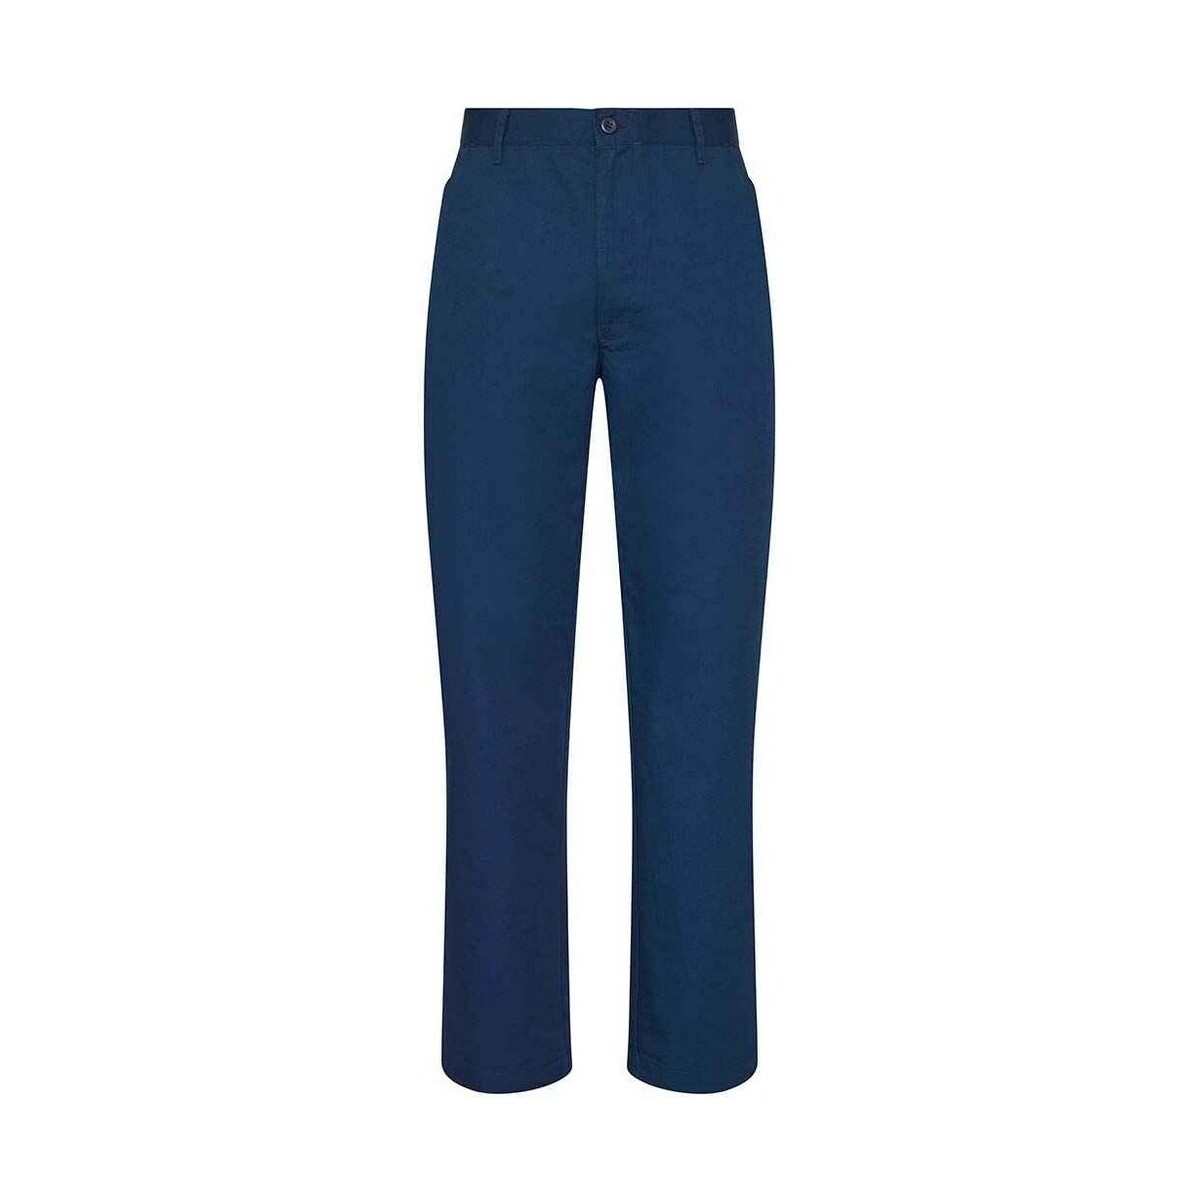 Vêtements Homme Pantalons Prortx Pro Bleu